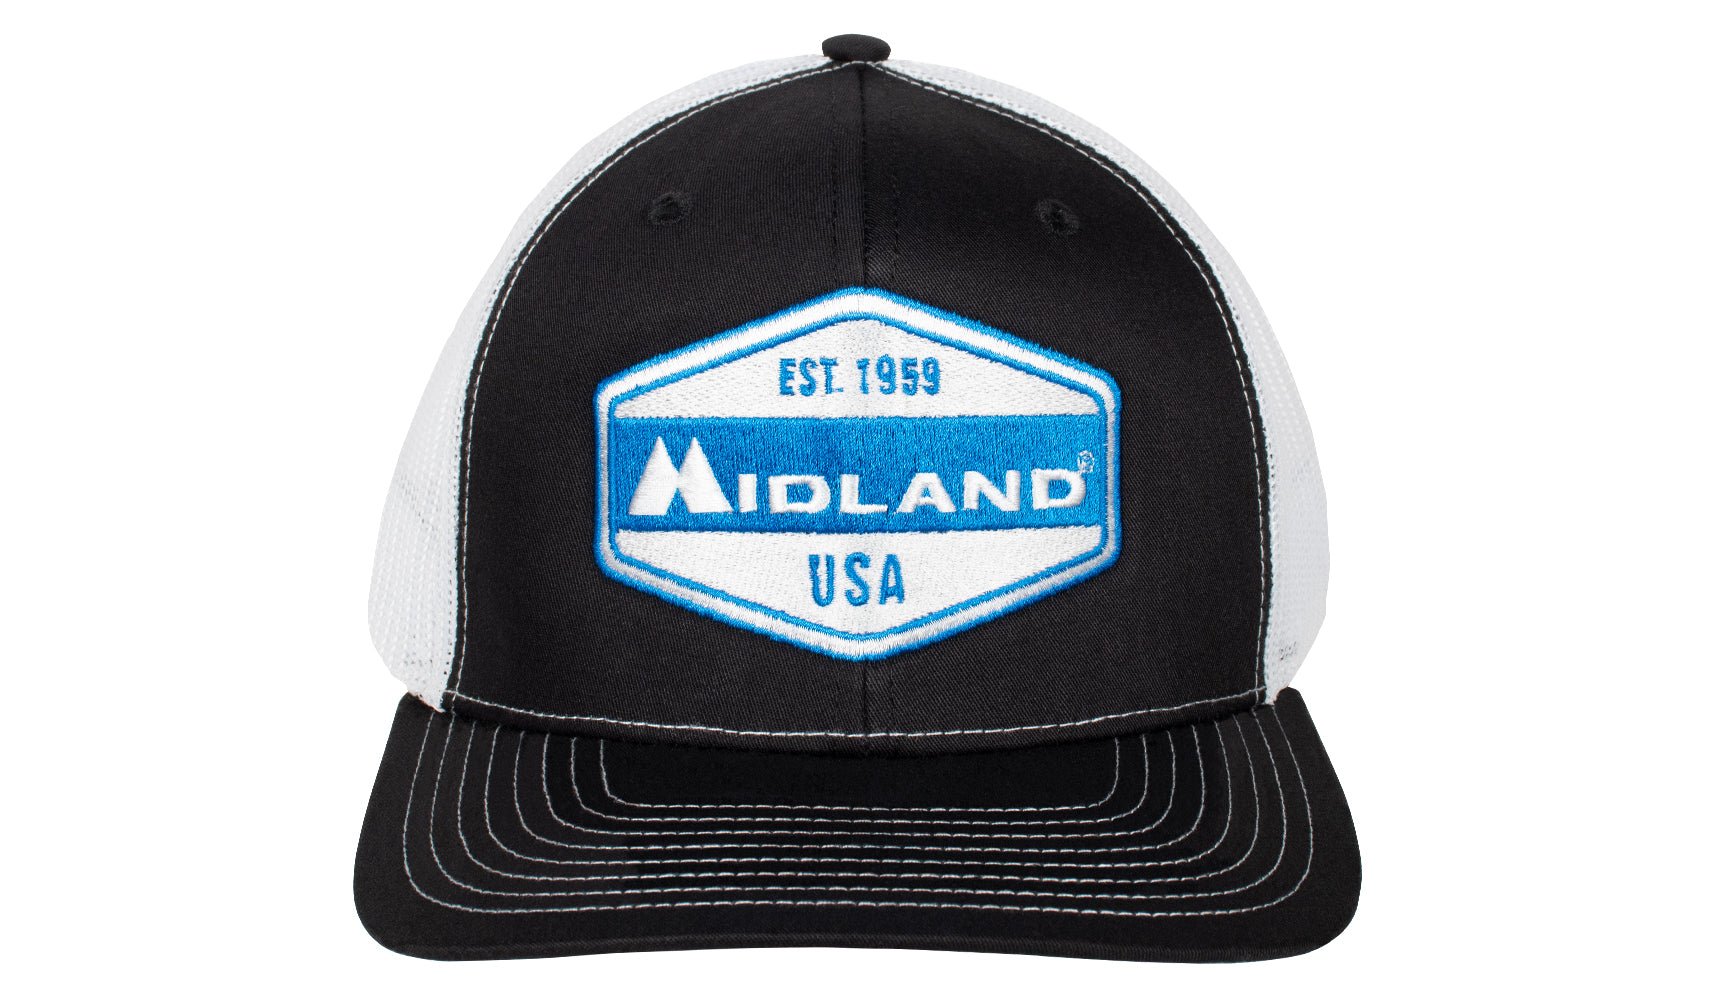 Midland Est. "1959" Crest Hat